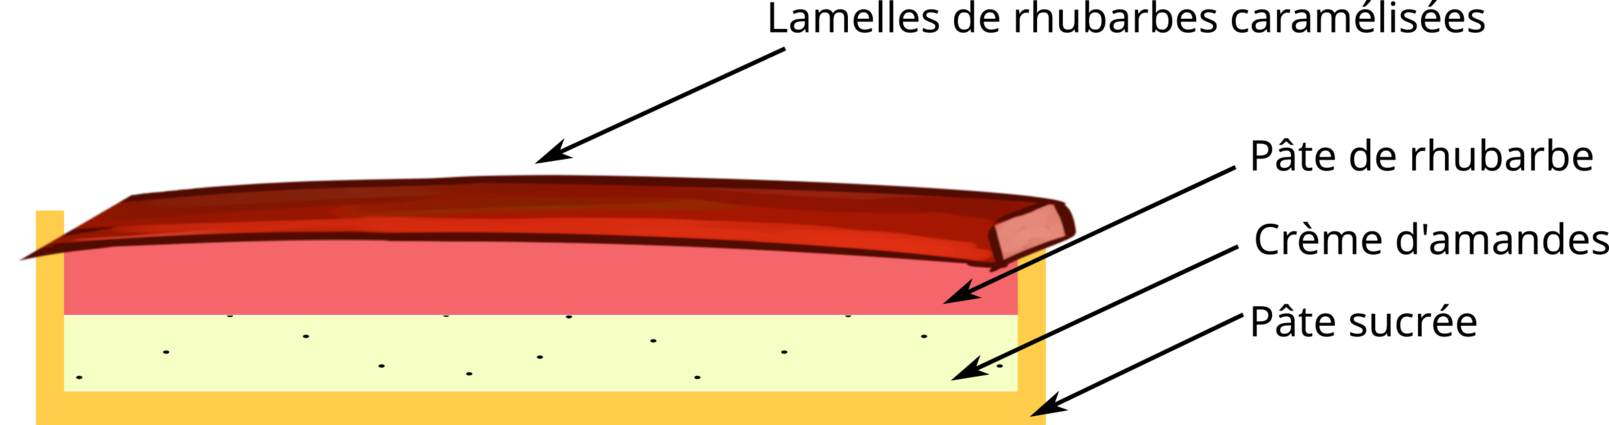 Diagramme de la tarte à la rhubarbe